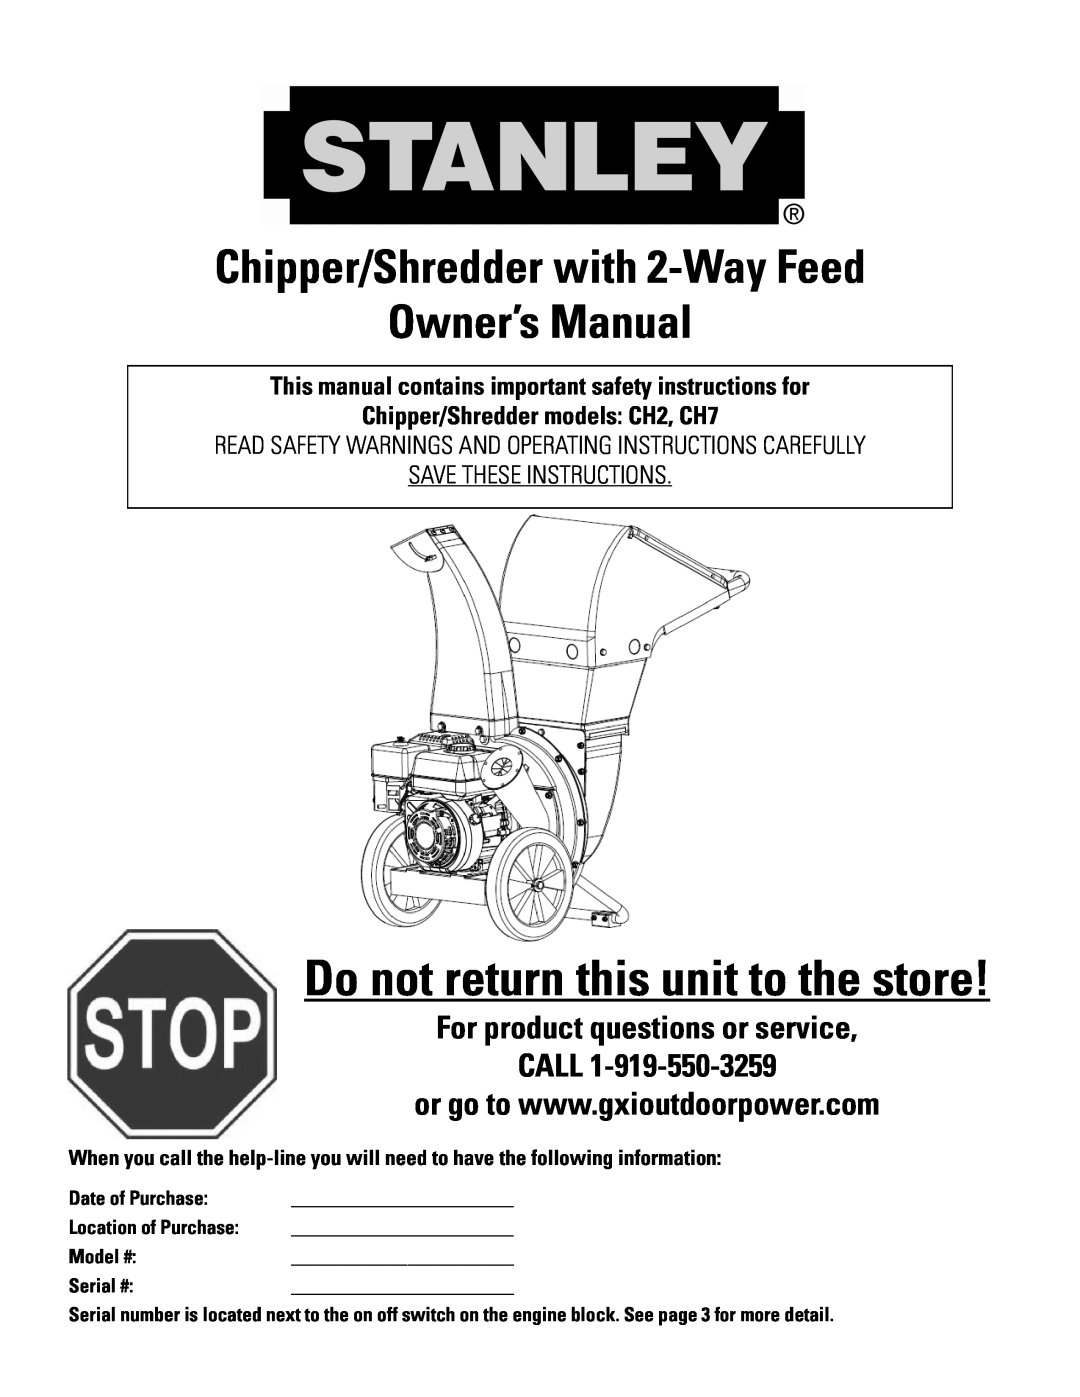 Stanley Black & Decker owner manual Chipper/Shredder models: CH2, CH7, Do not return this unit to the store, Model # 